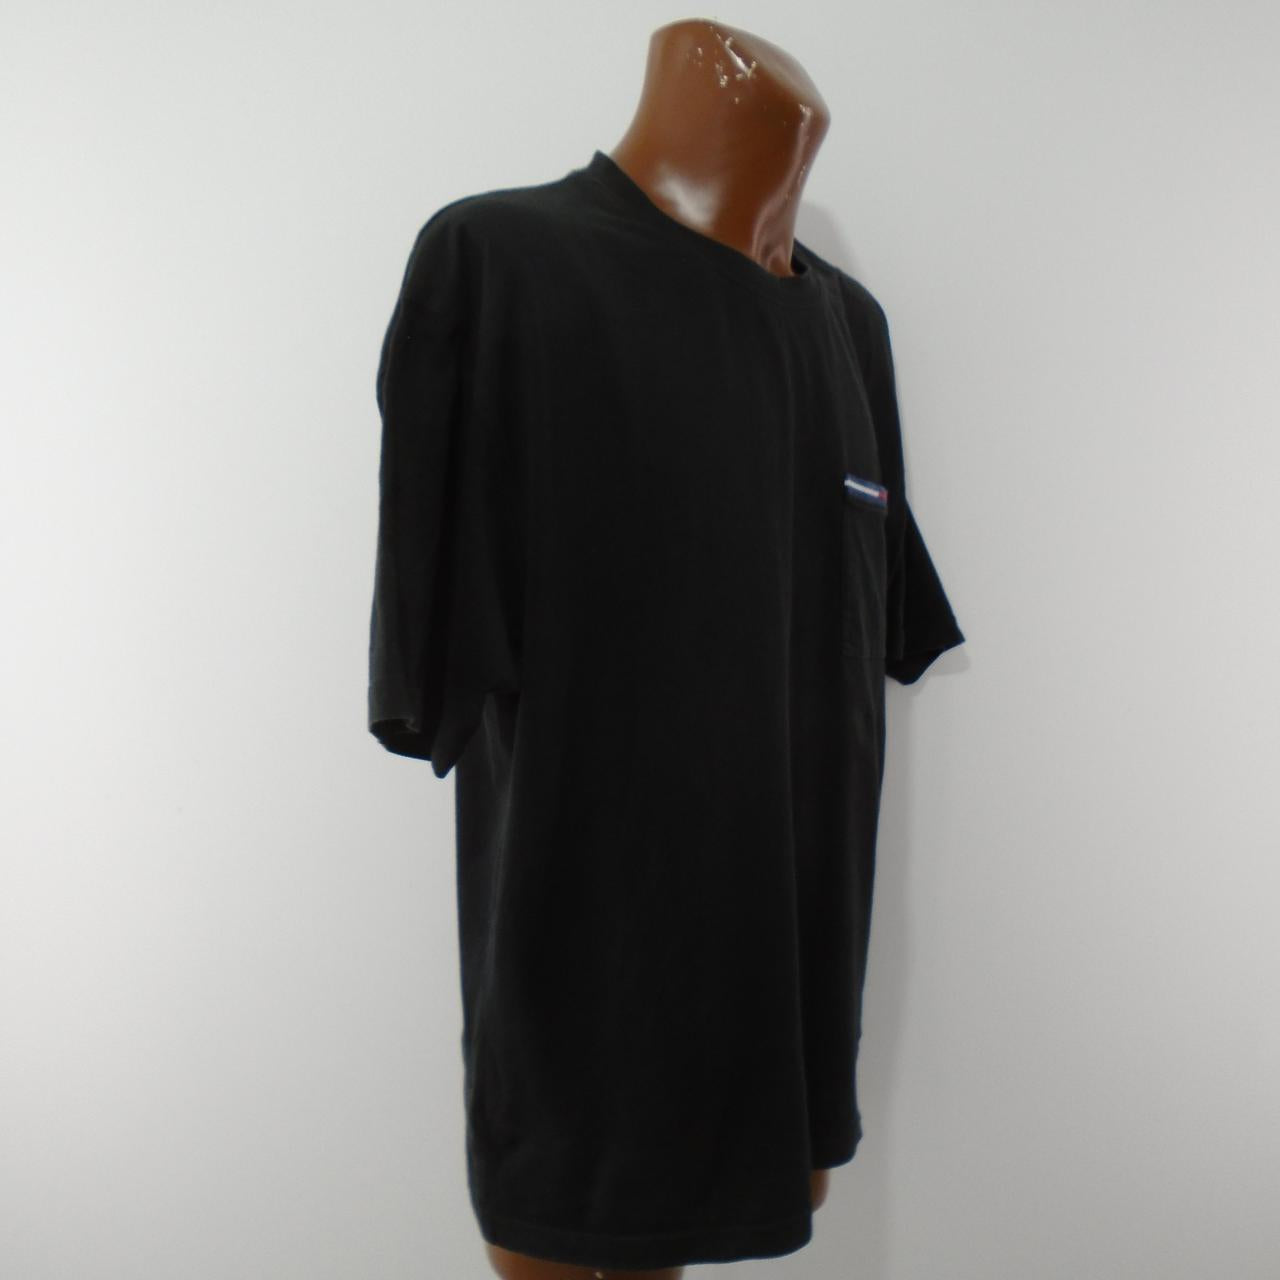 Men's T-Shirt Tommy Hilfiger. Black. XL. Used. Good